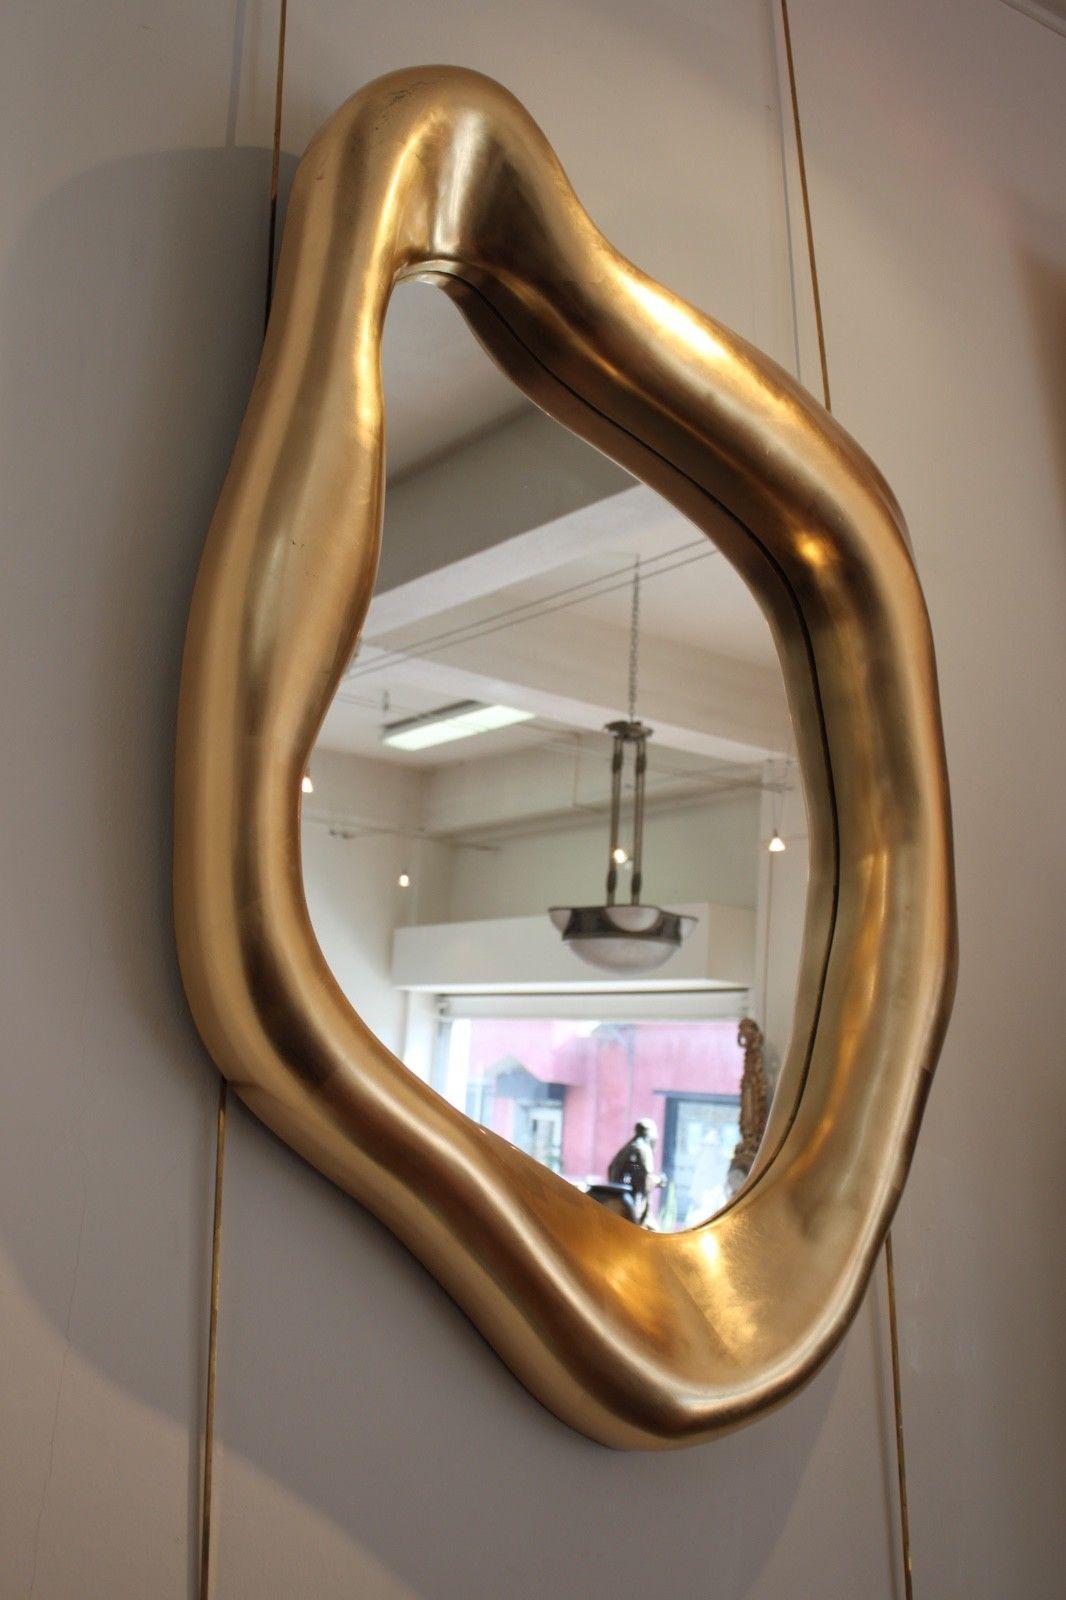 Pair of freeform gold mirrors. 
Very decorative.
Dimensions:
 H 119 x W 75 x D 9 centimeters 
 H 117 x W 68 x D 9 centimeters.
 